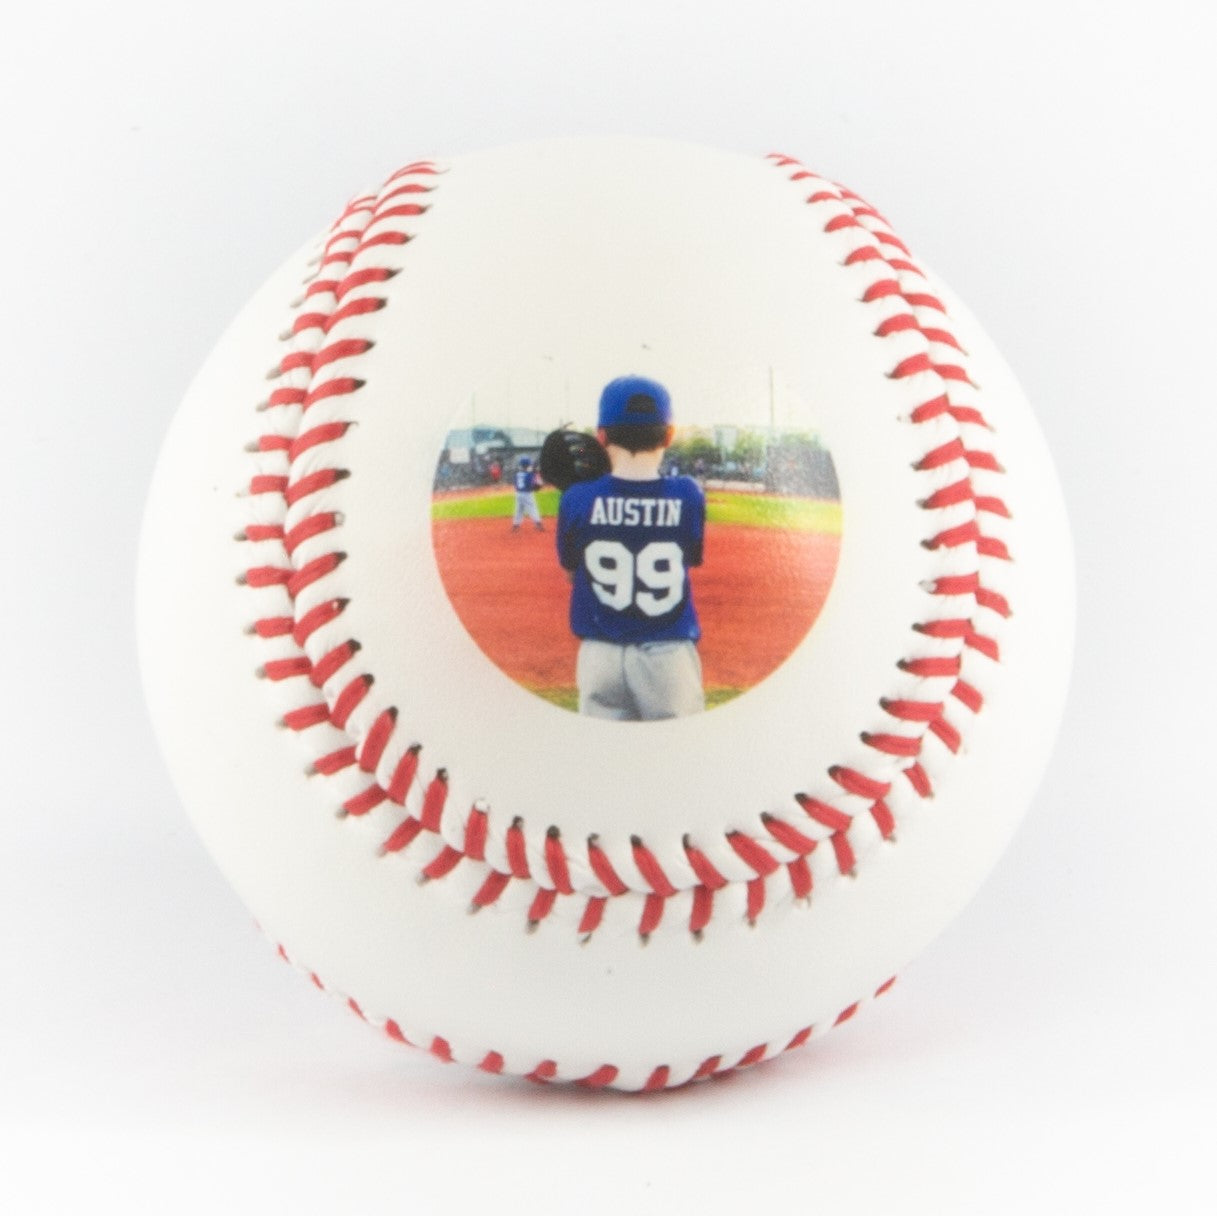 Printed Baseball with Custom Printed Photo